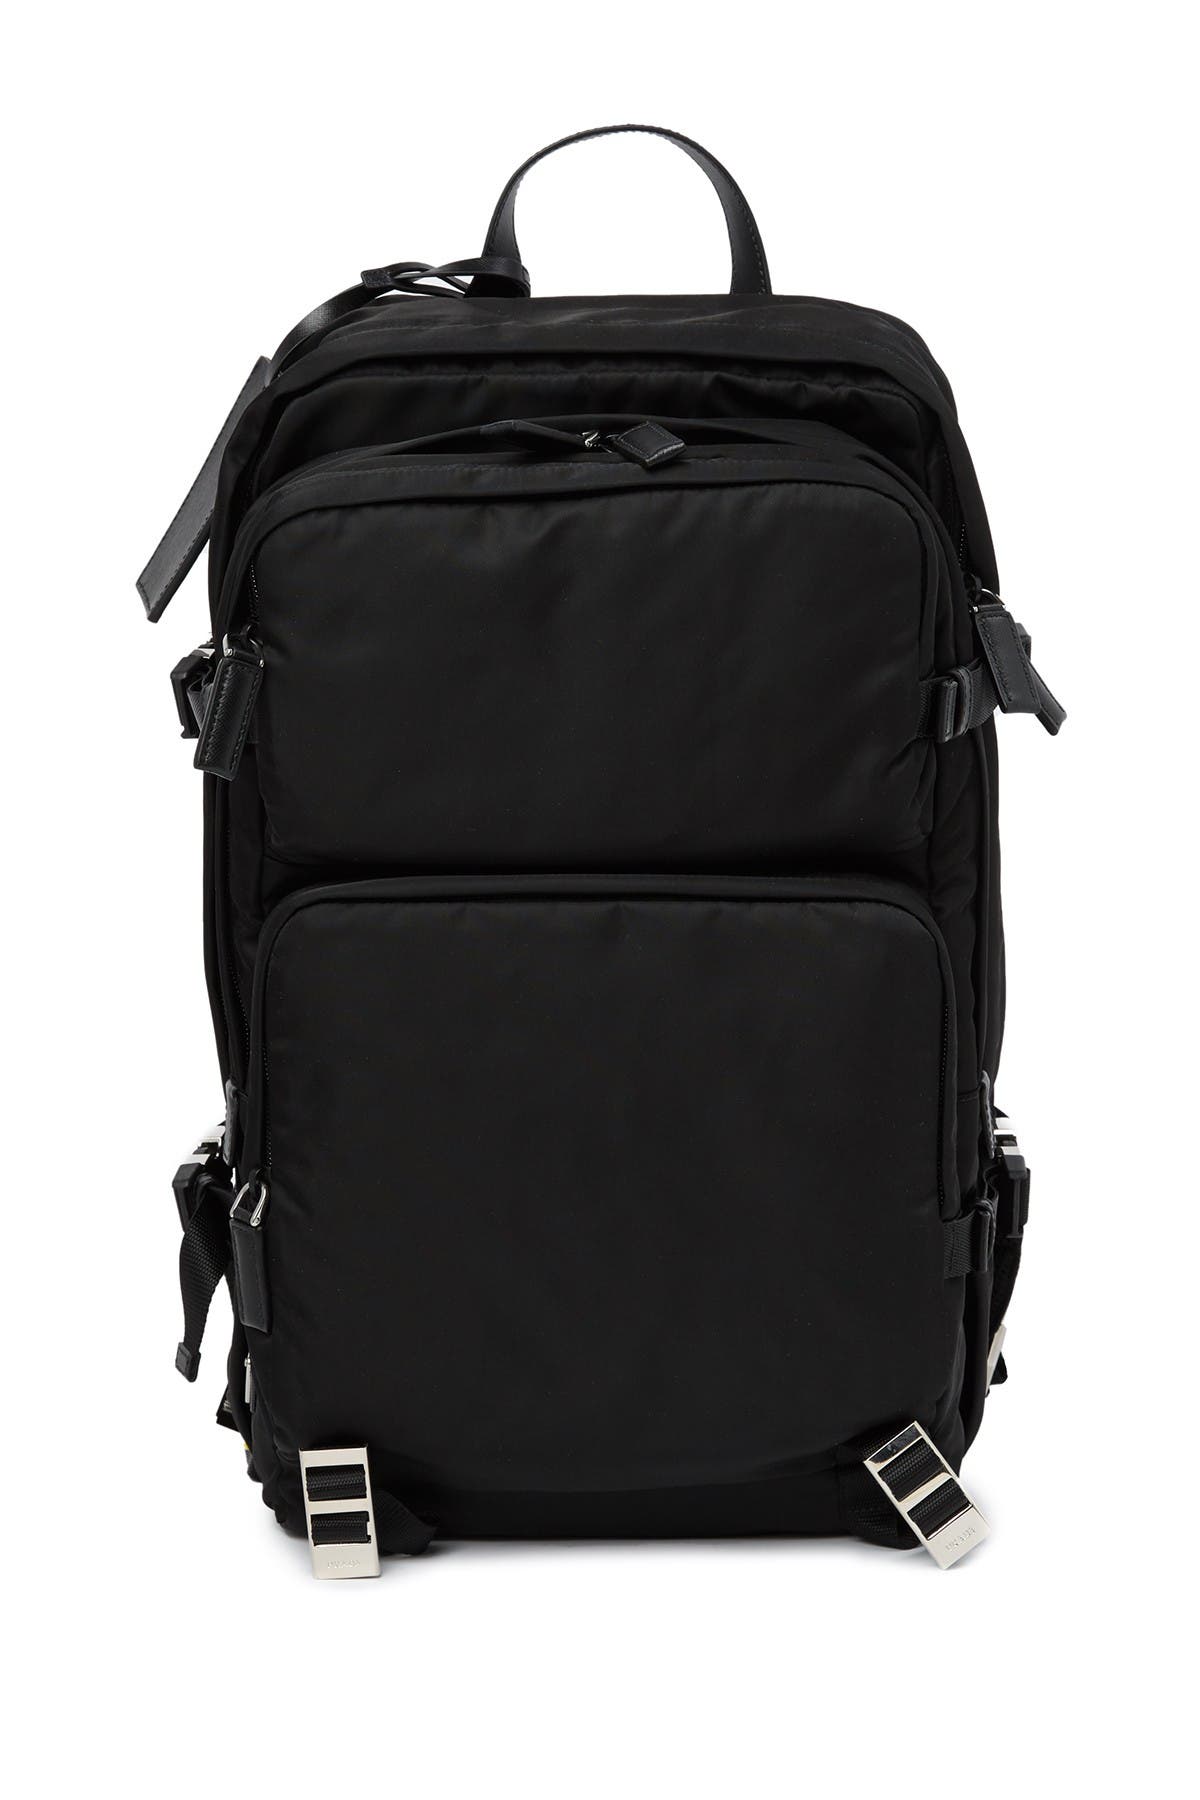 nordstrom prada backpack